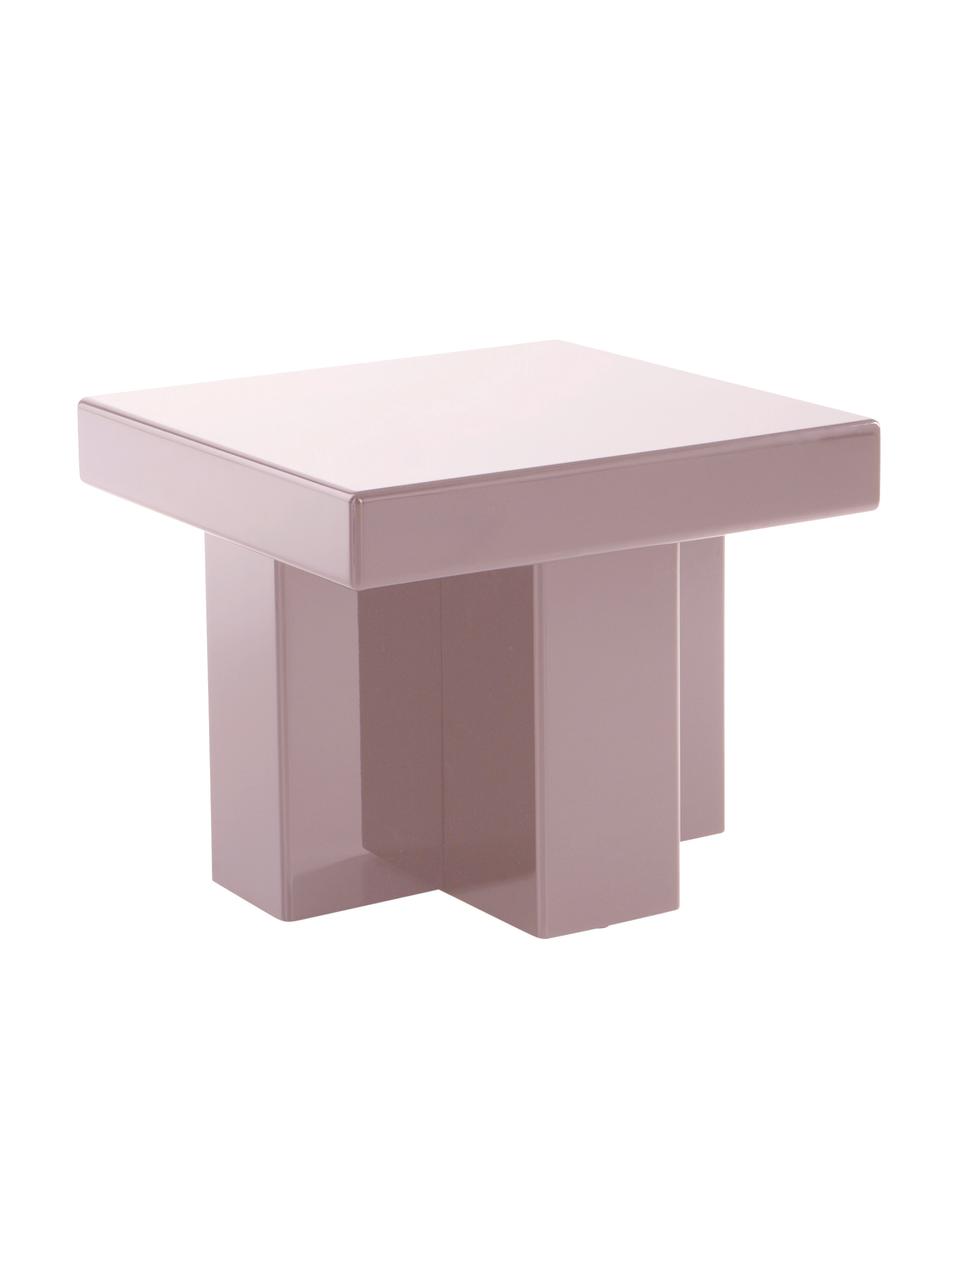 Odkladací stolík Crozz, Lakovaná MDF-doska strednej hustoty, Bledoružová, Š 50 x V 48 cm